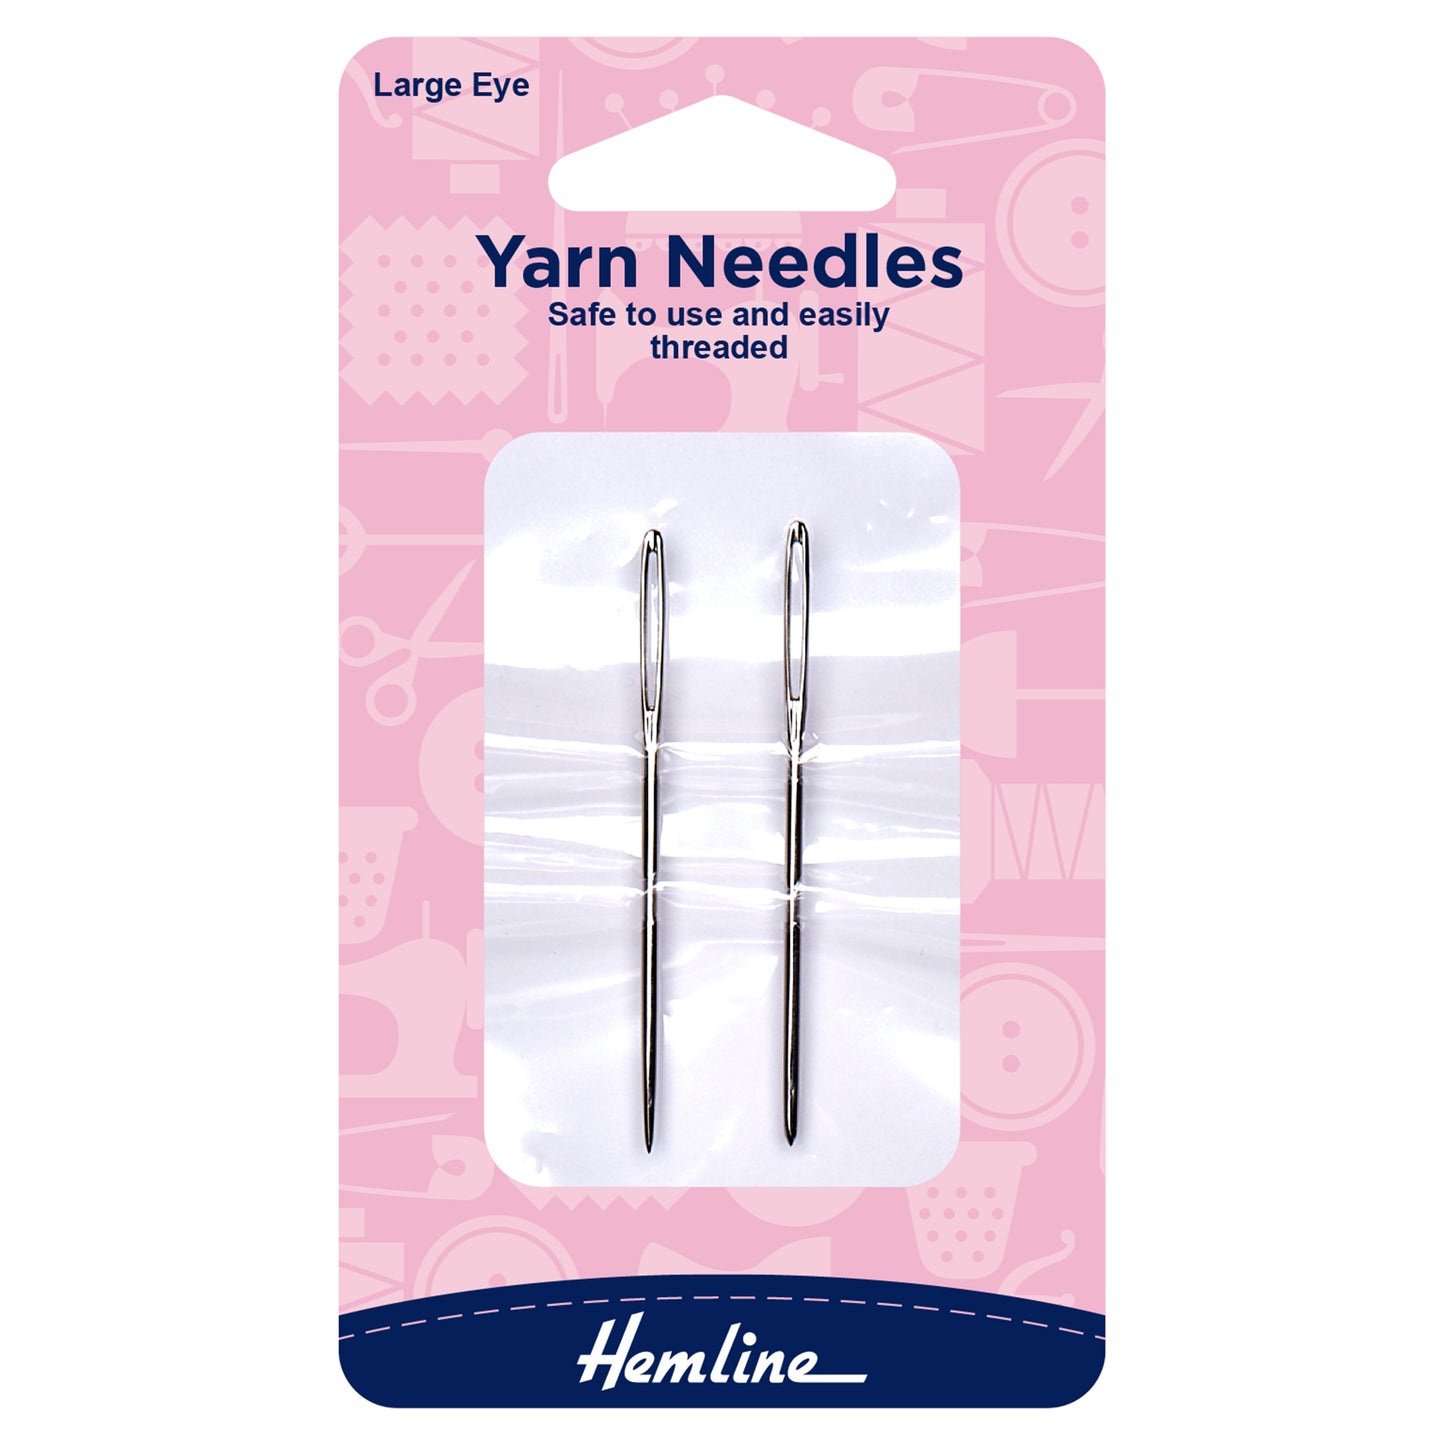 Yarn Needles- Safe to use and easily threaded- Large Eye